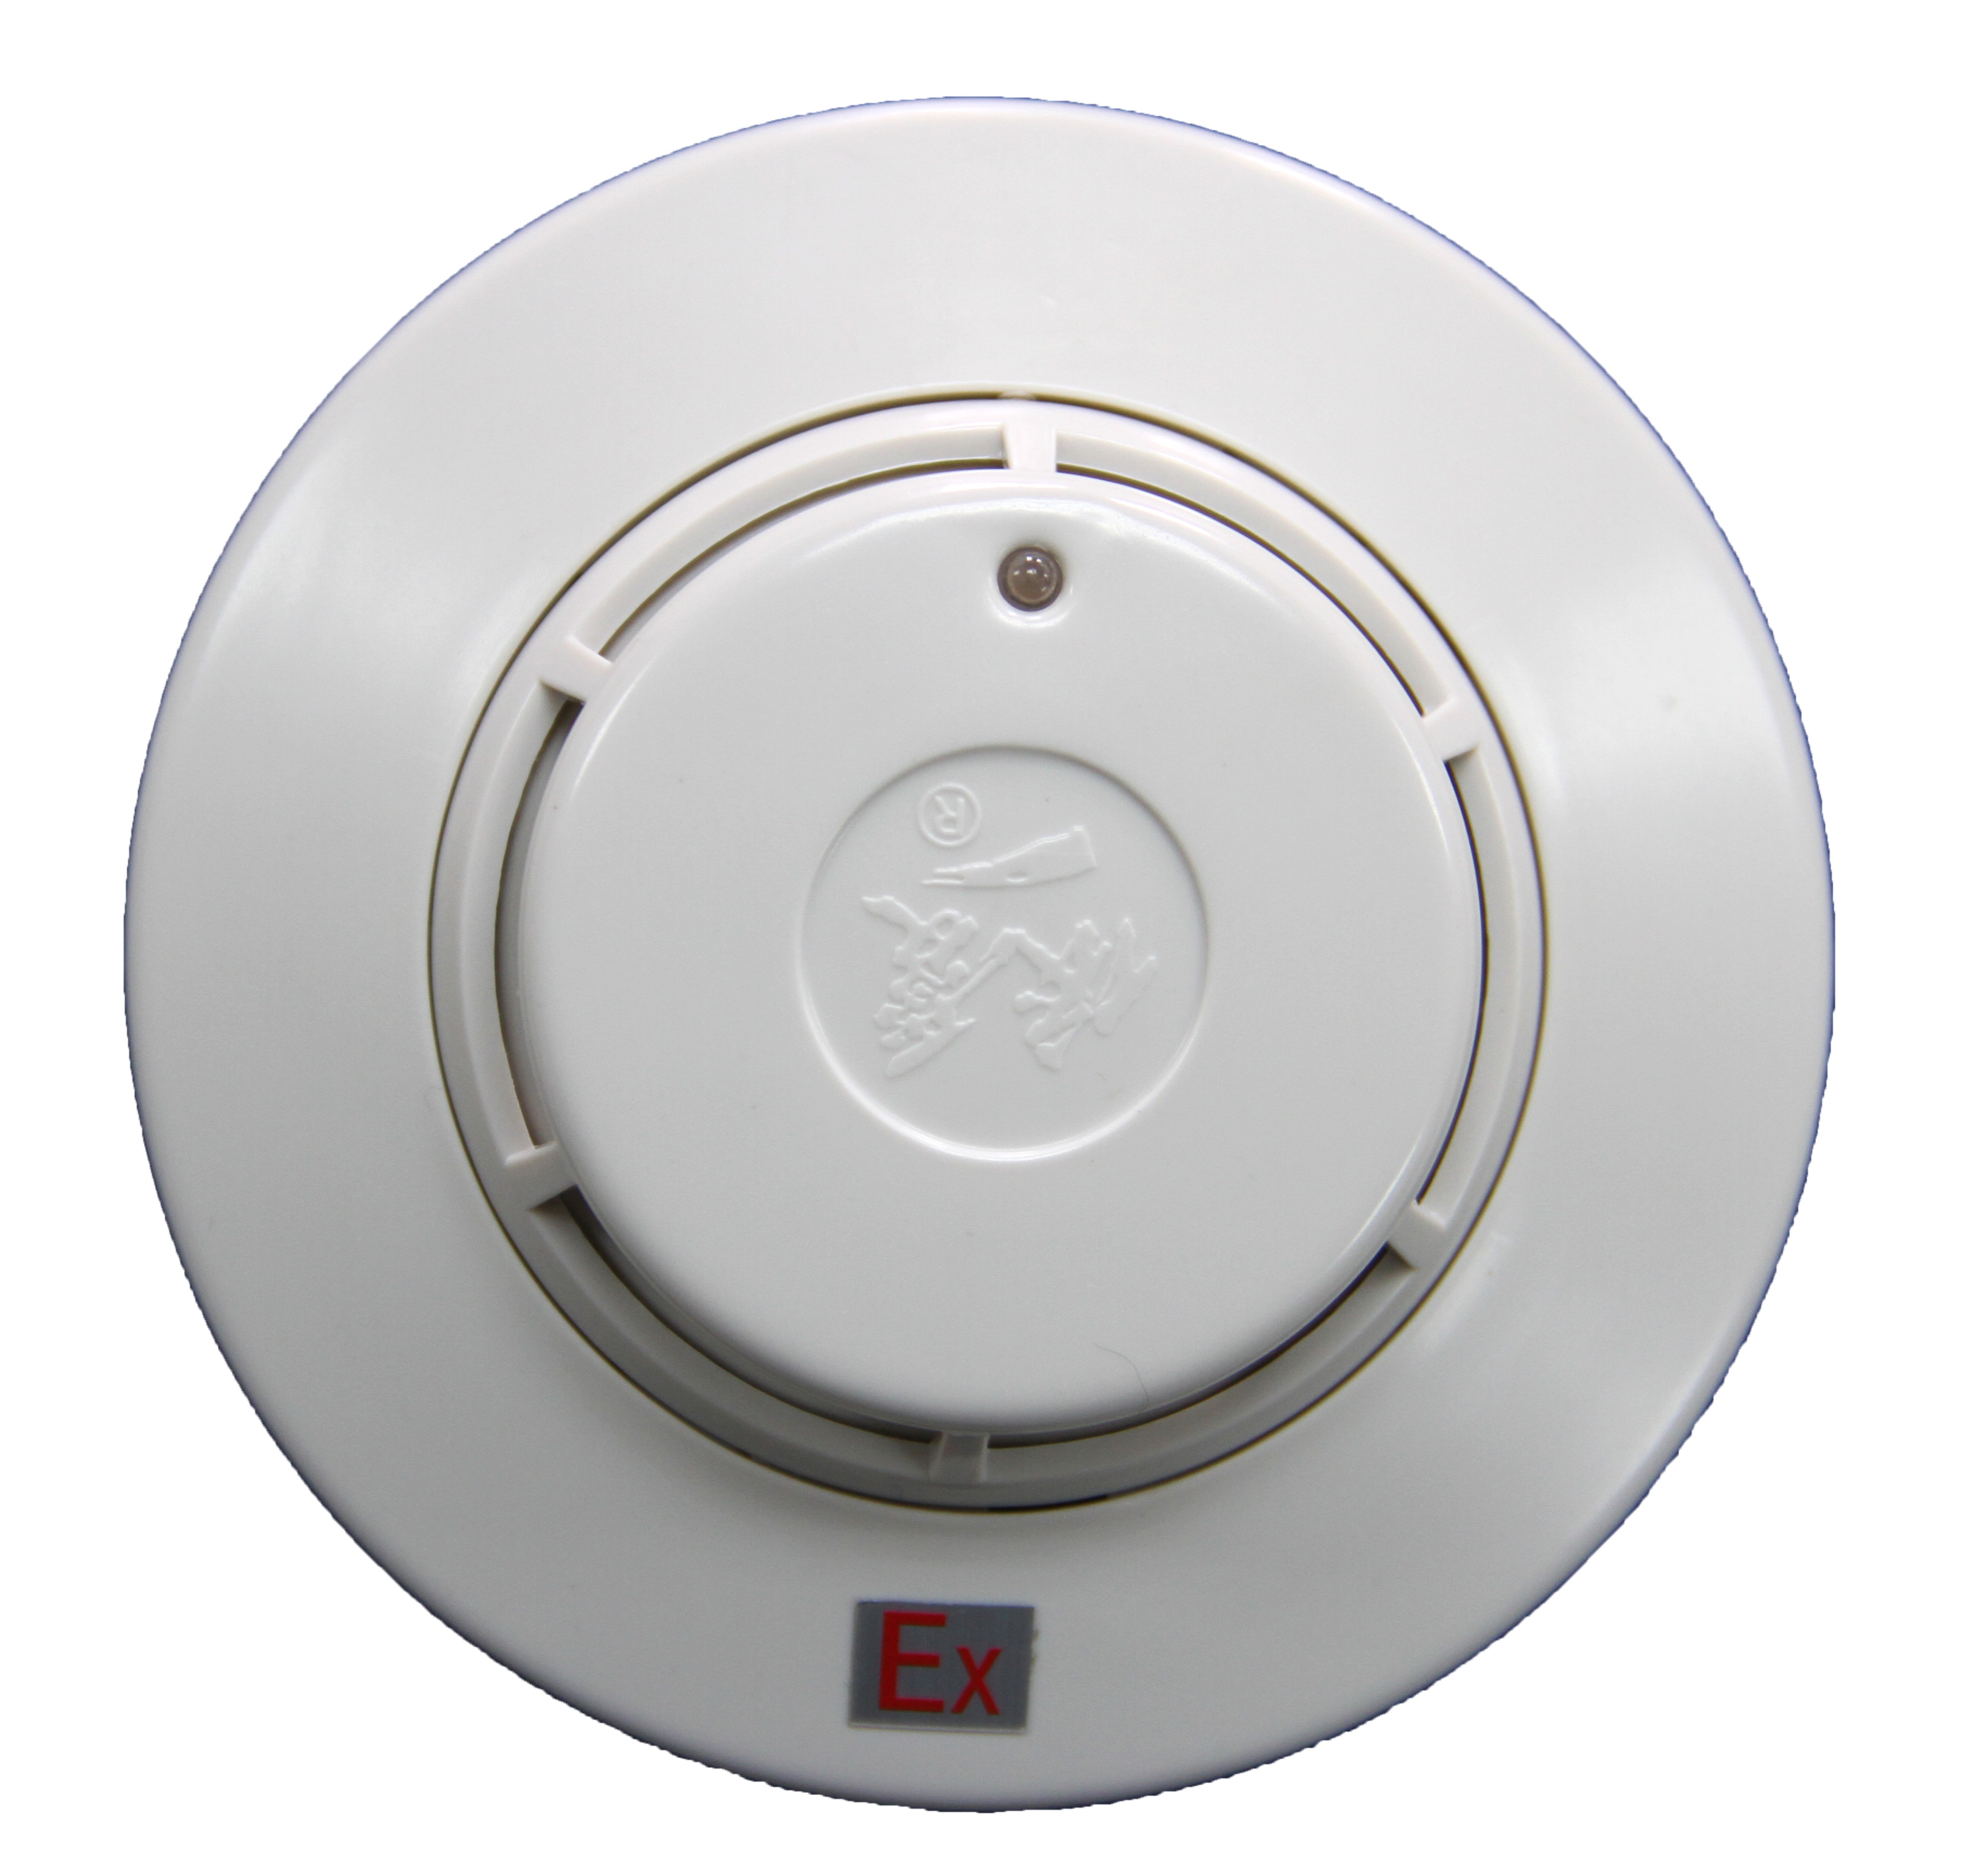 JTY-GD-EI6017Ex Photo-electricity smoke detector